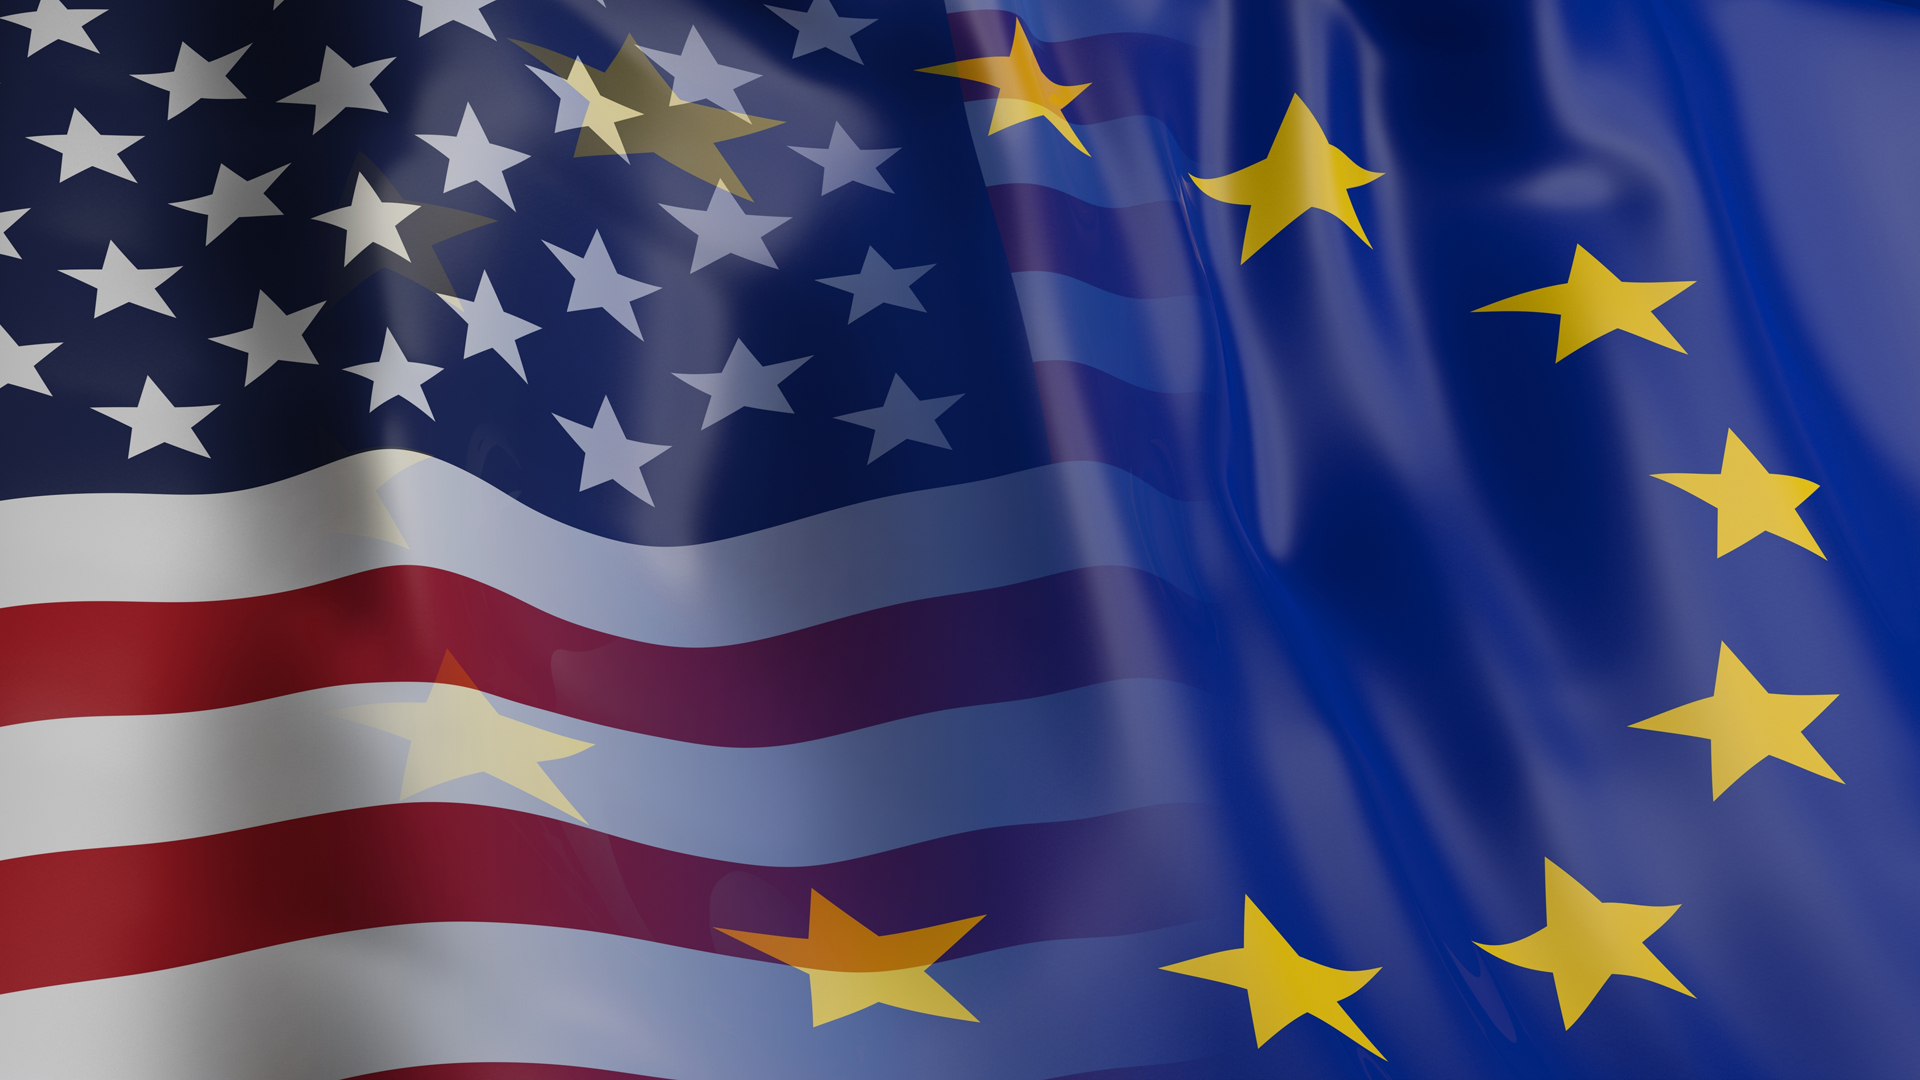 EU and USA flag. 3d illustration